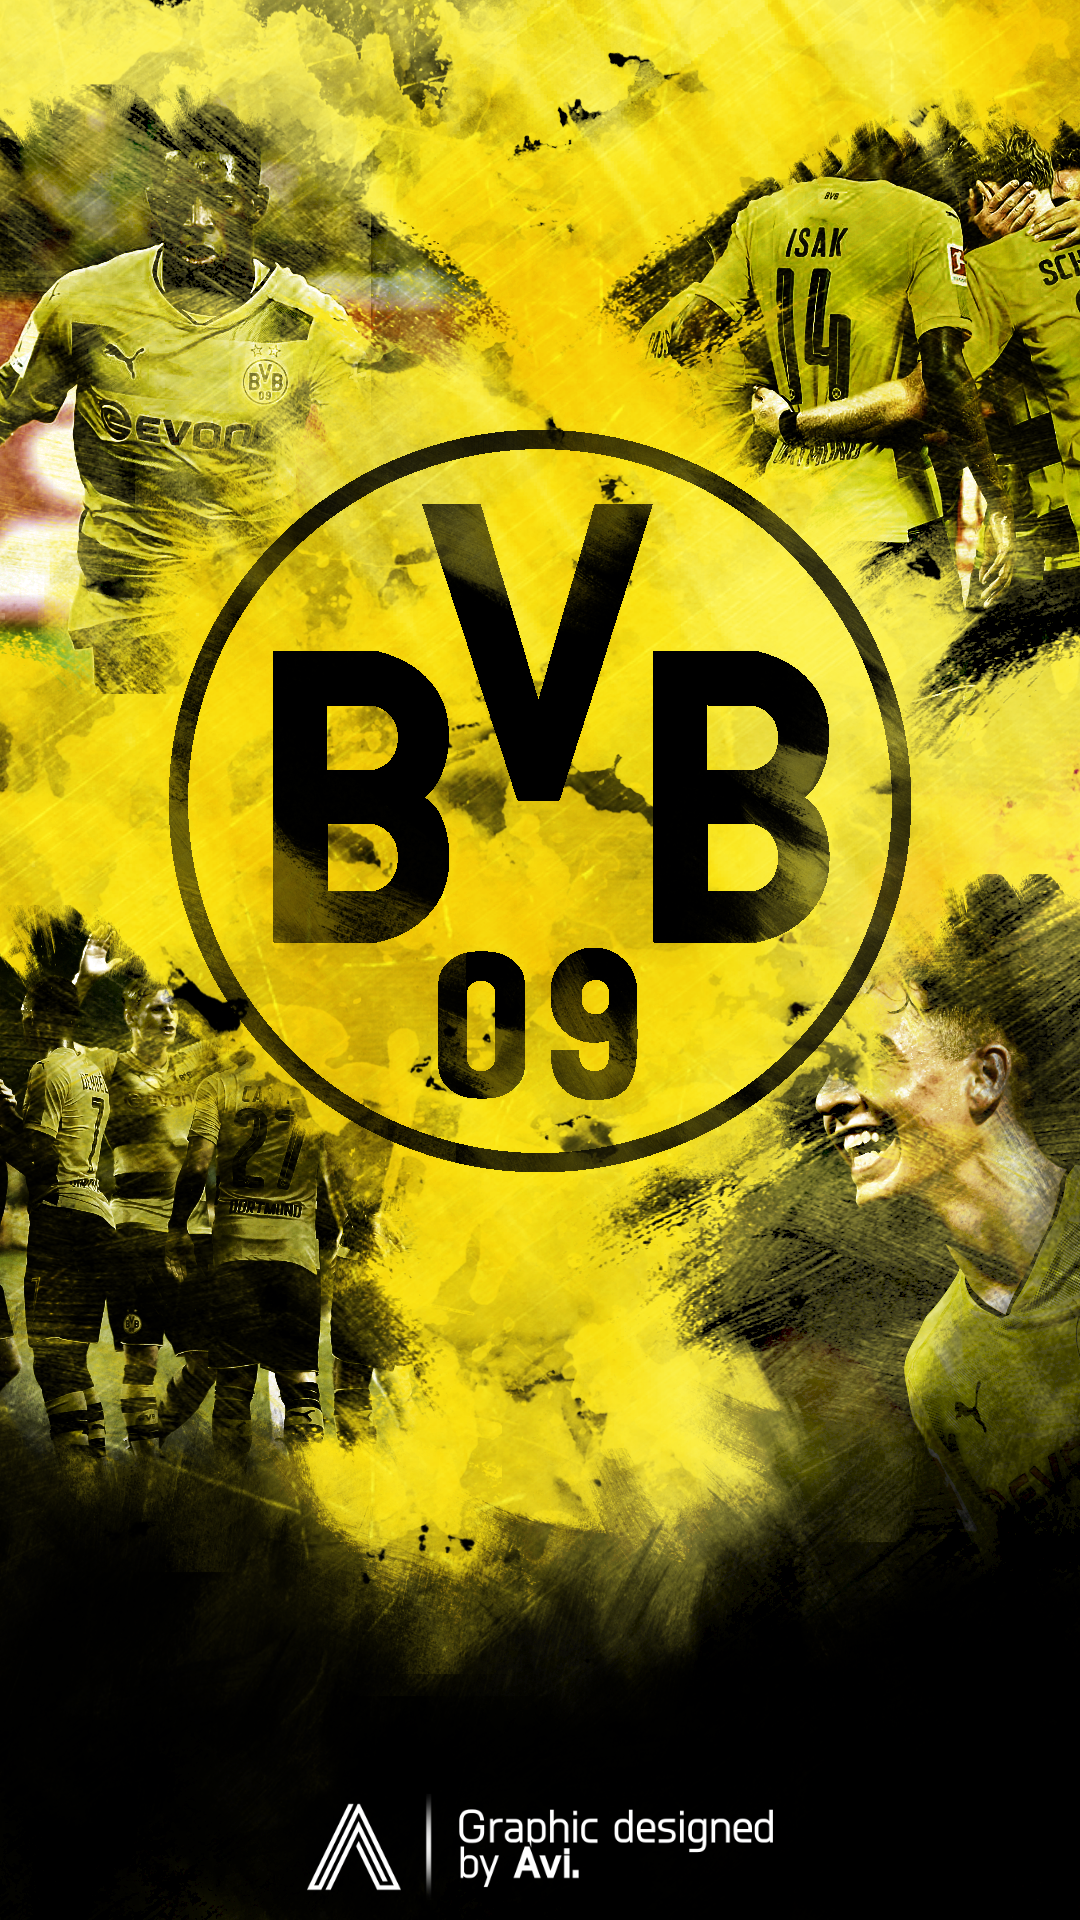 Bvb Wallpaper Borussia Dortmund Logo Hd Wallpaper Backgrounds Download